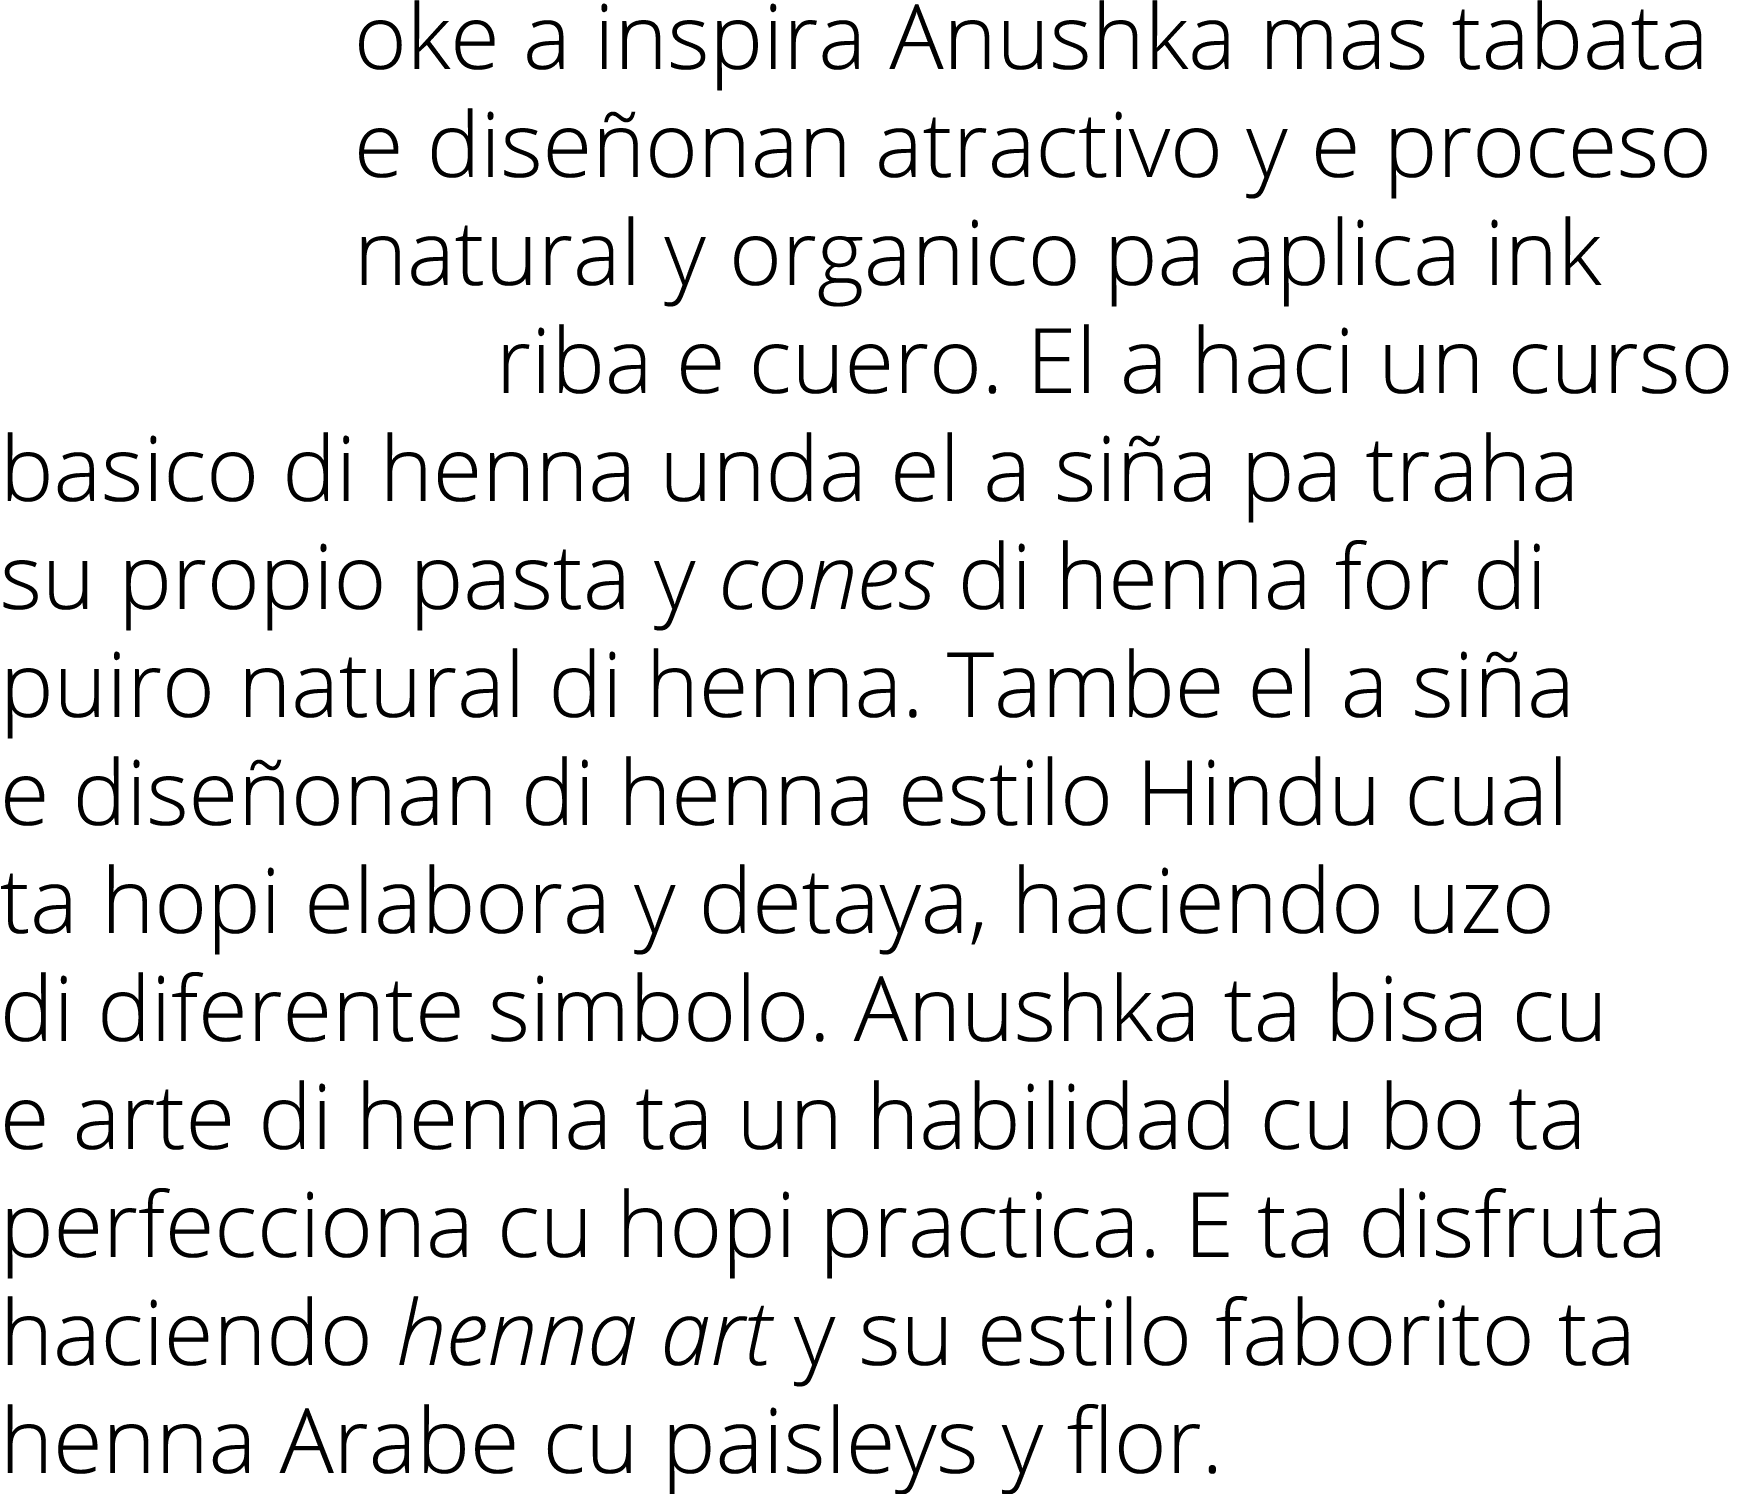 oke a inspira Anushka mas tabata e dise onan atractivo y e proceso natural y organico pa aplica ink riba e cuero. El ...